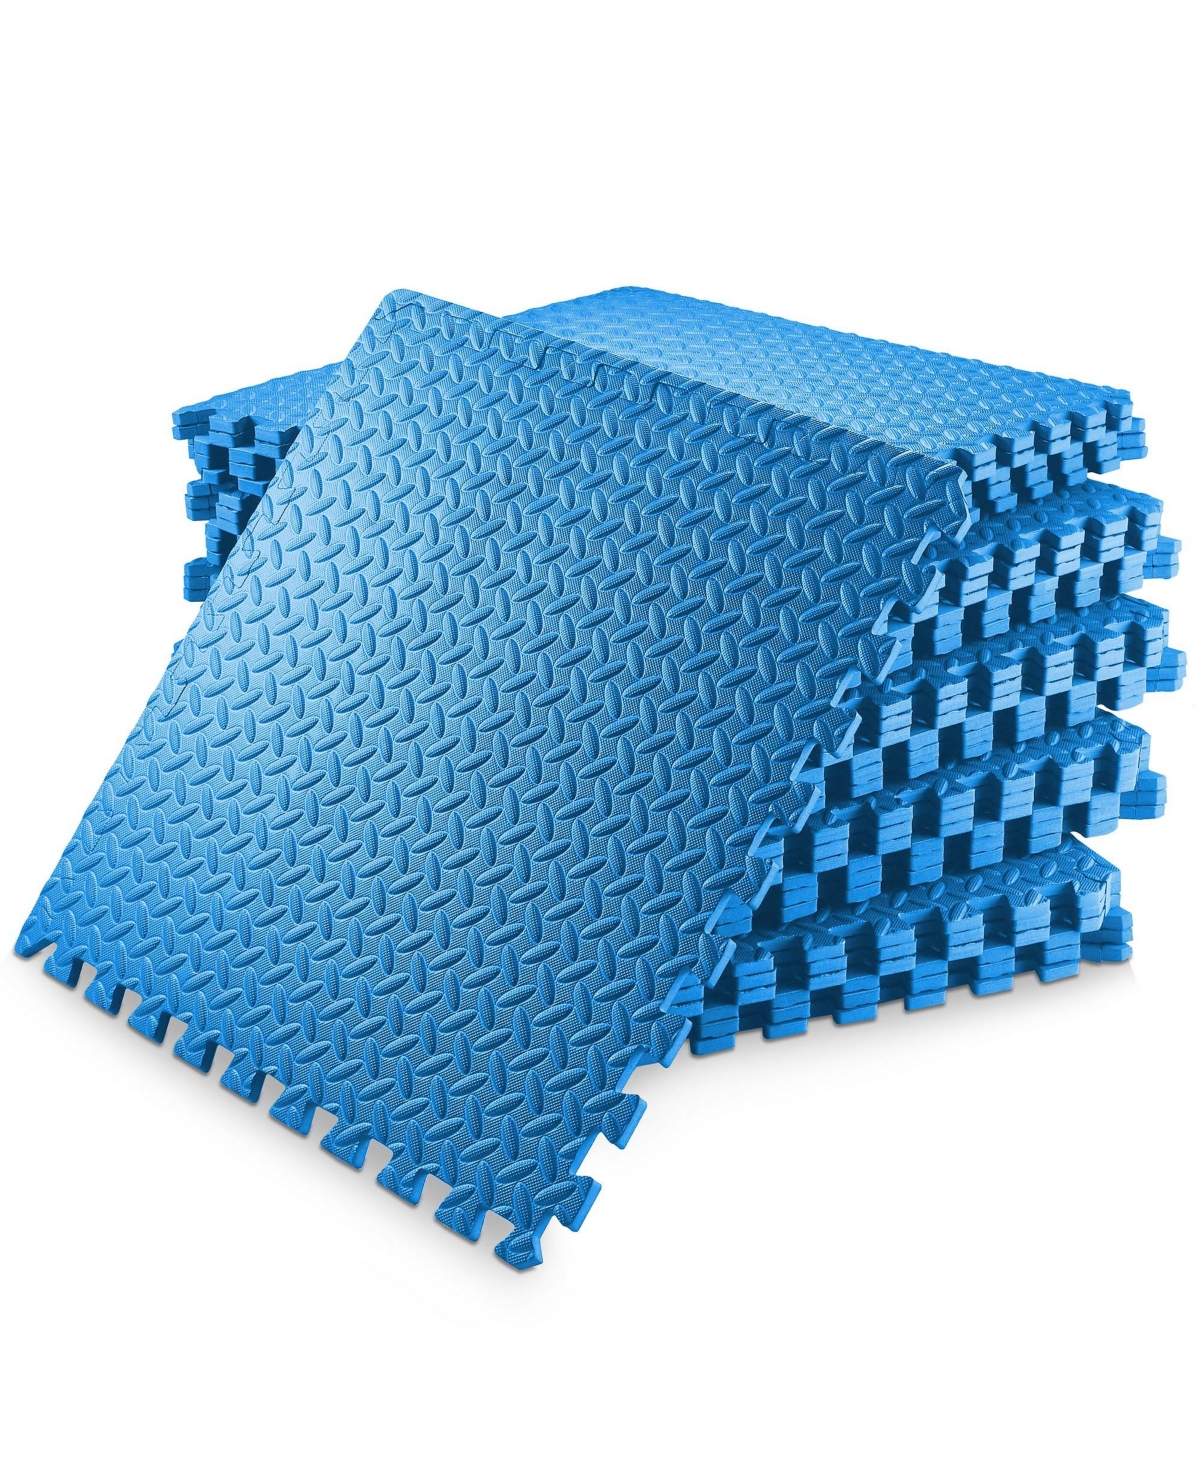 Pack of 30 Exercise Flooring Mats - 24 x 24 Inch Foam Rubber Interlocking Puzzle Floor Tiles - Blue - Blue